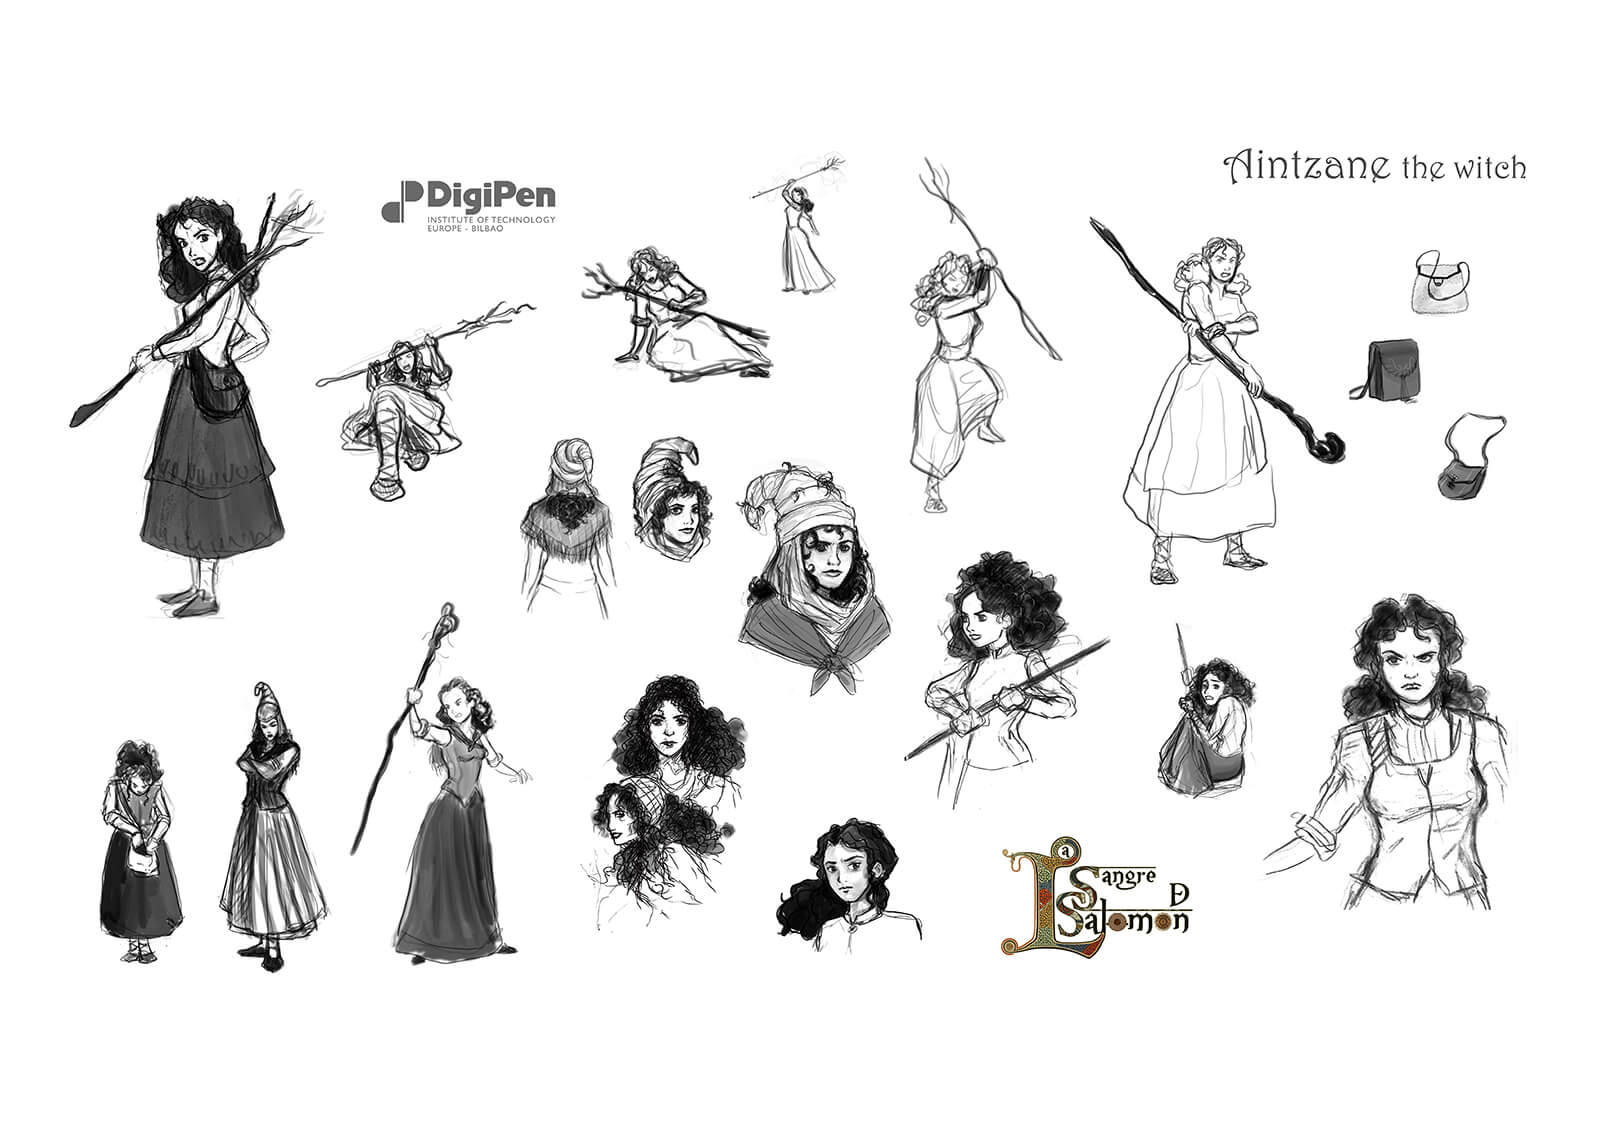 Concept drawings of Aintzane The Witch from La Sangre de Salomon